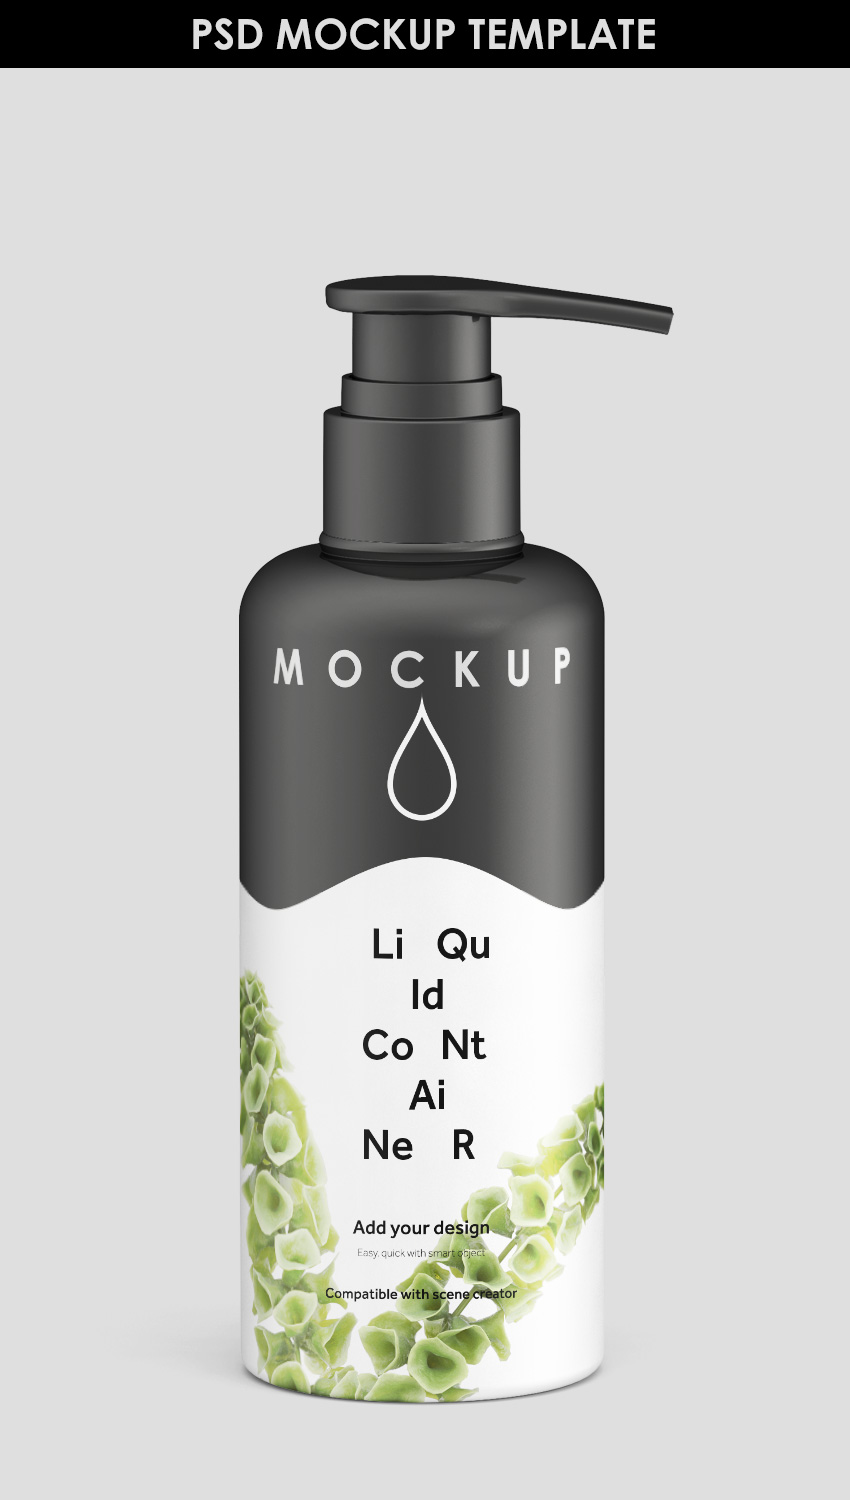 Download Spray Bottle MockUp Template PSD